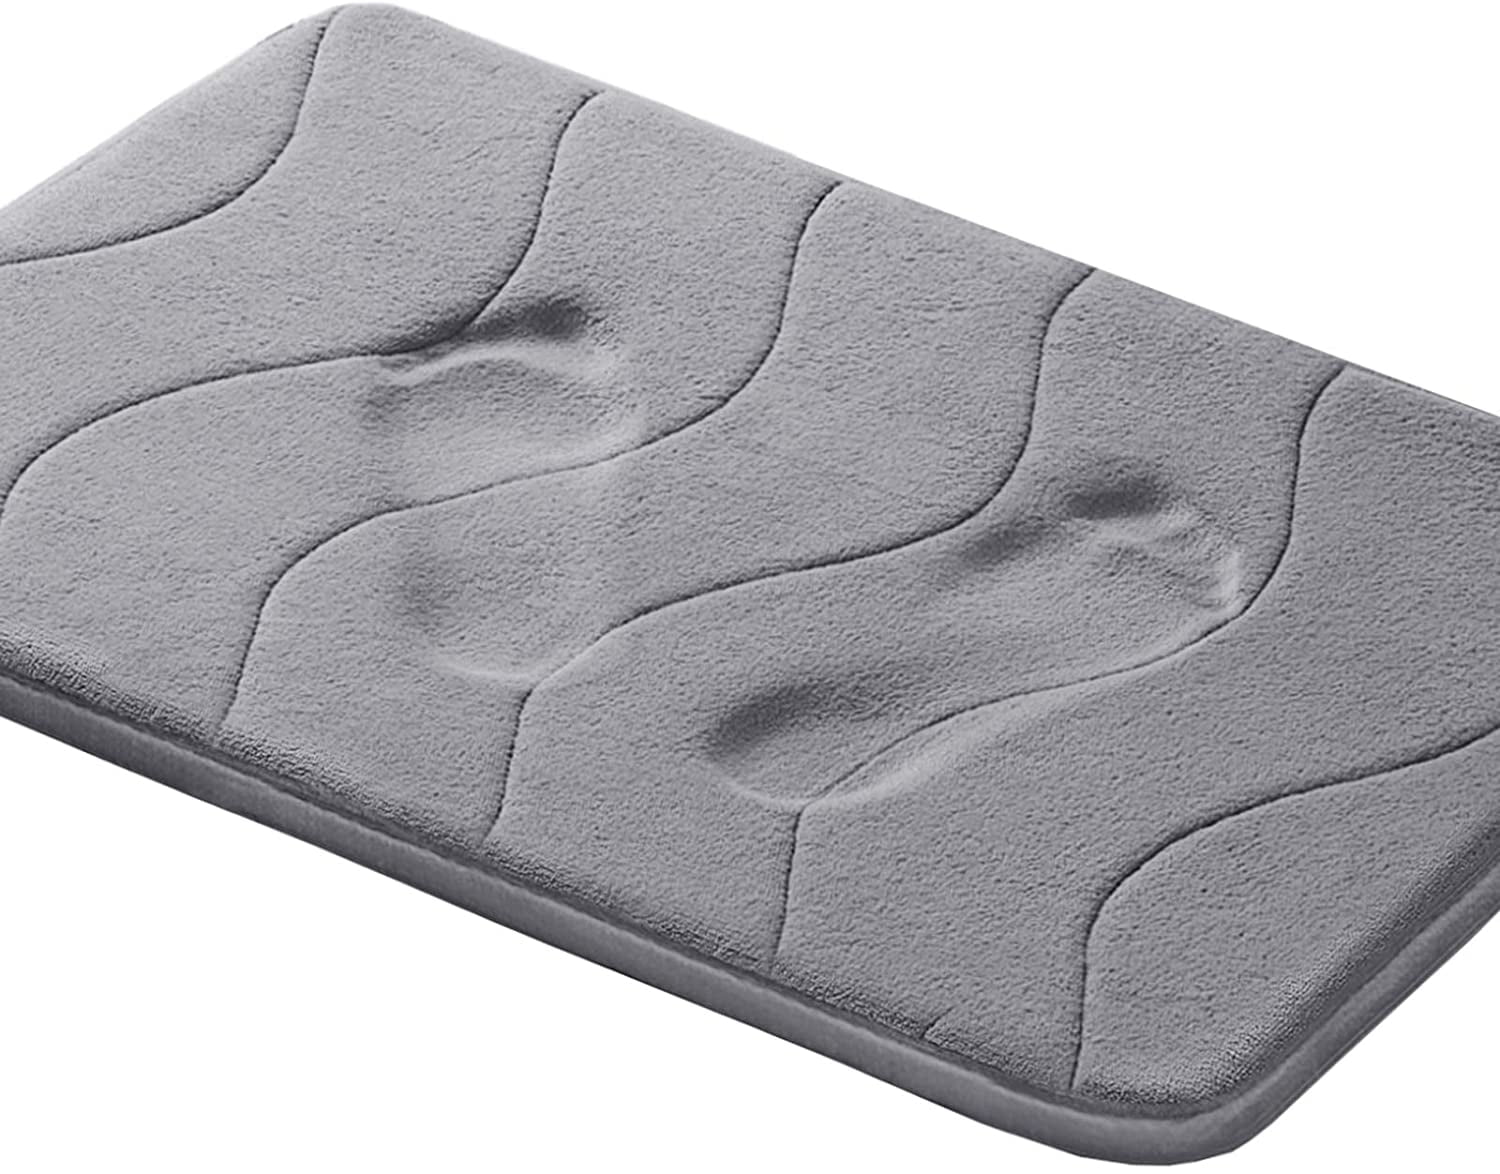 Gray PVC Memory Foam Bath Mat (17 x 24)